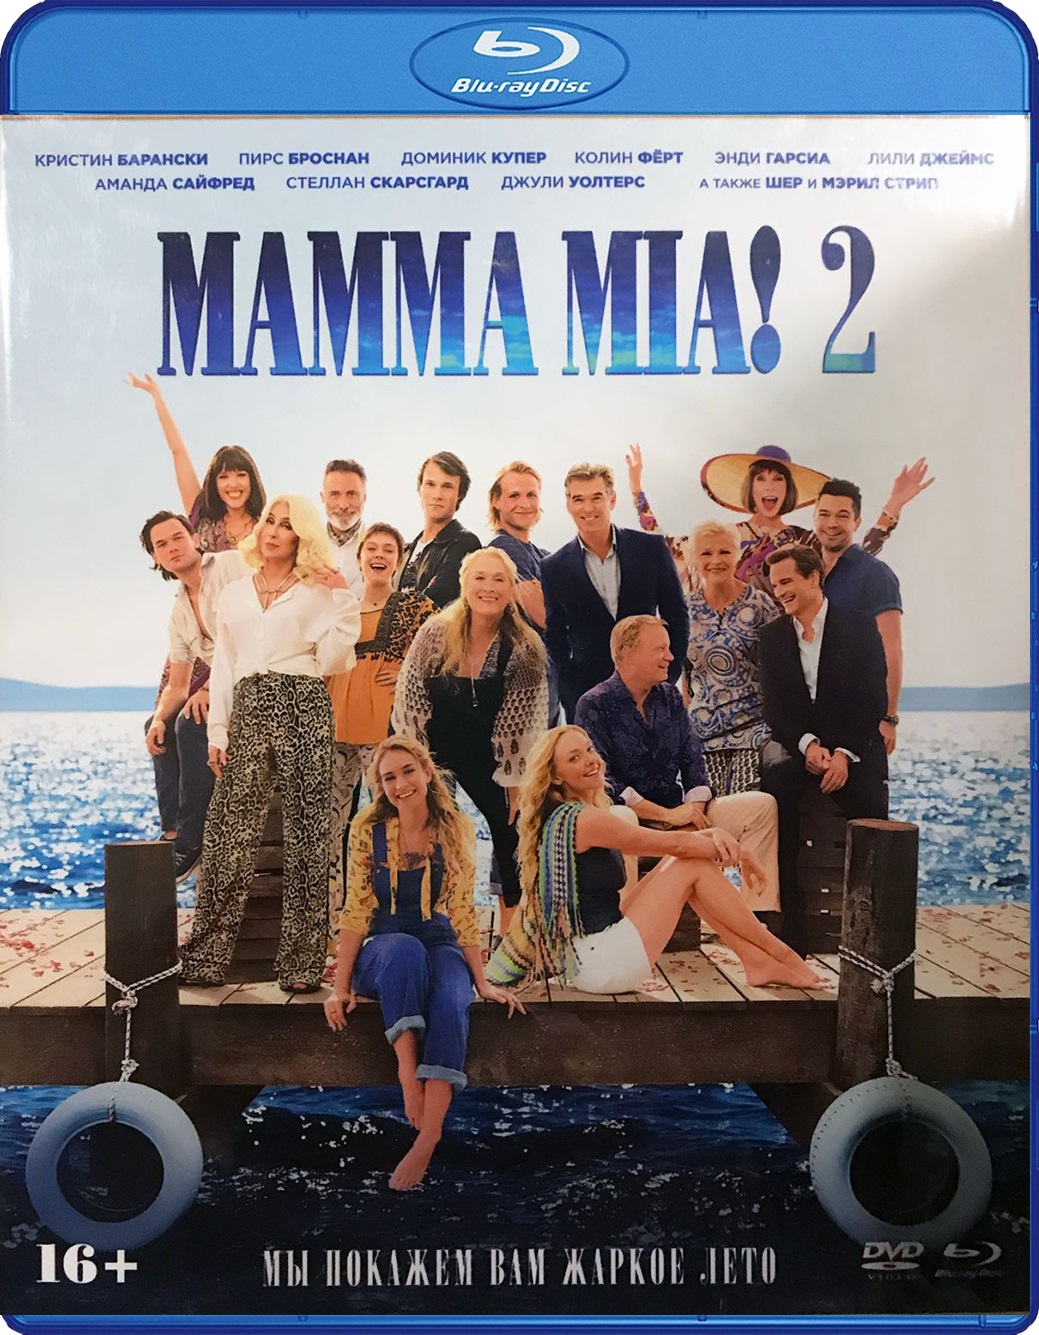 MAMMA MIA! 2:  Специальное издание (Blu-ray + DVD) от 1С Интерес